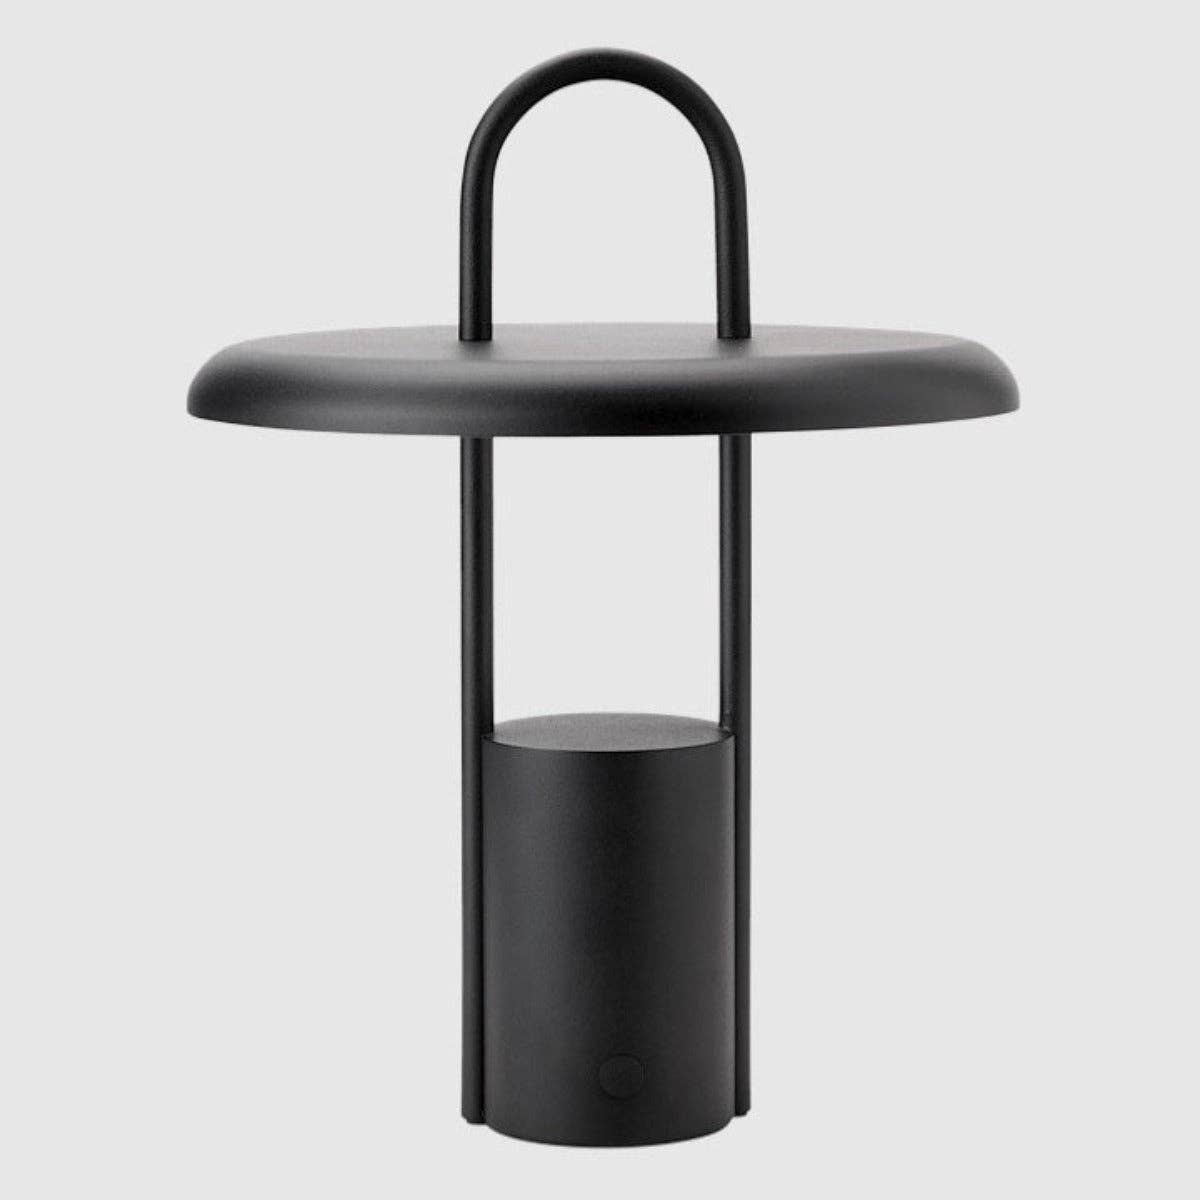 Pier LED lamp - black (614) by Stelton